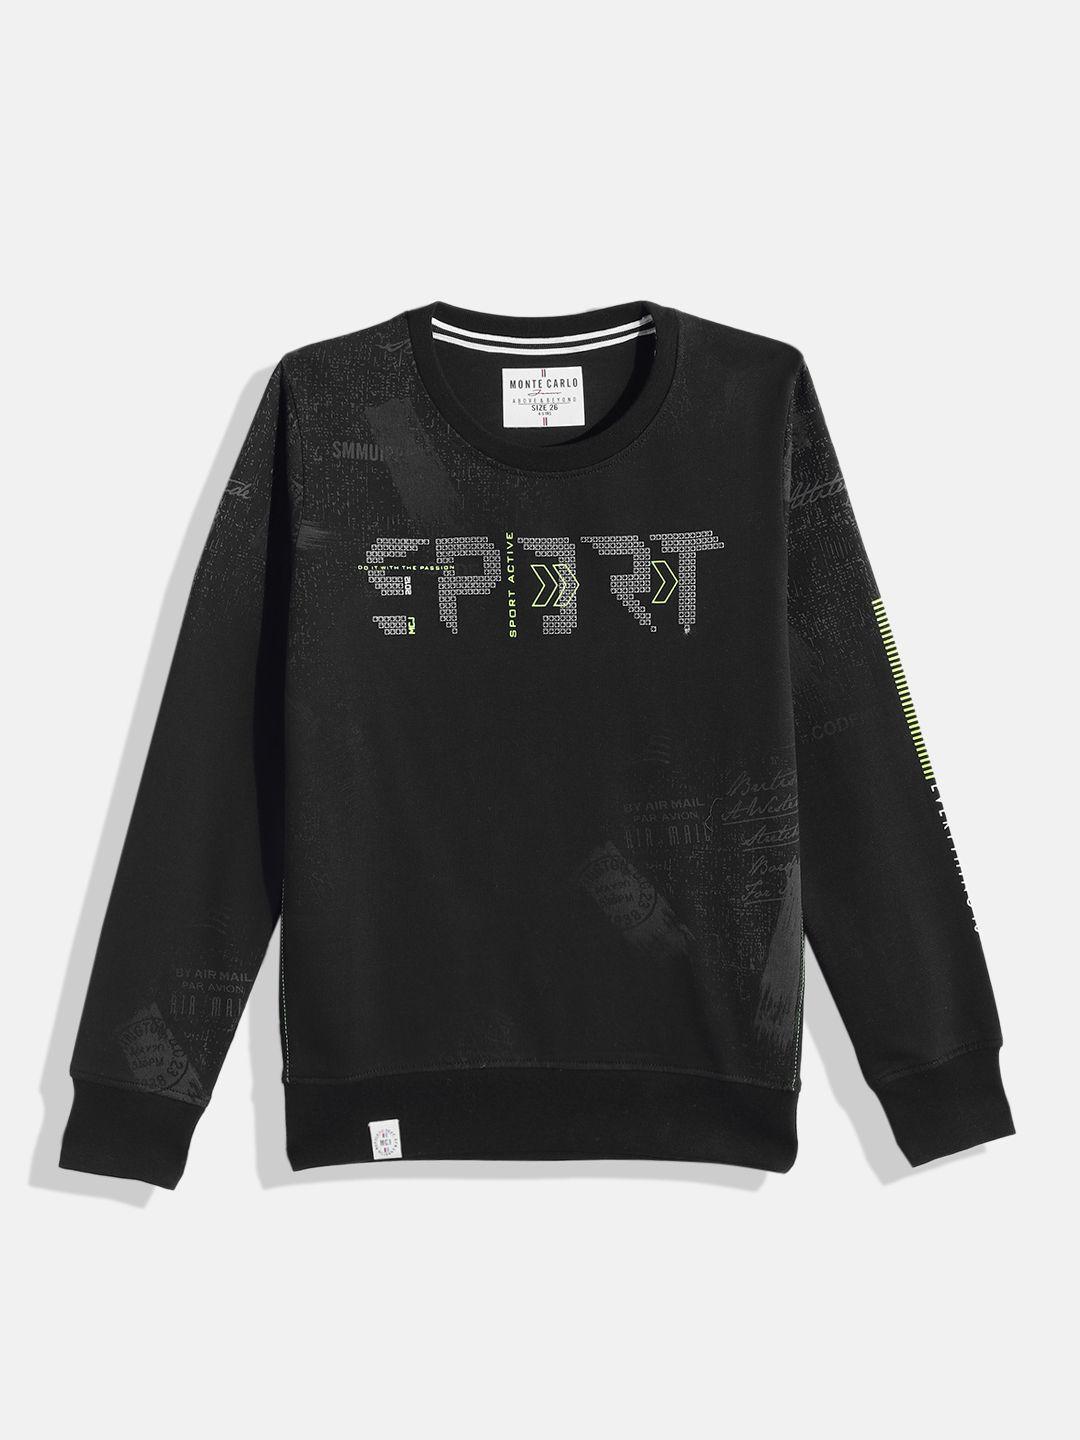 monte carlo boys typography printed sweatshirt